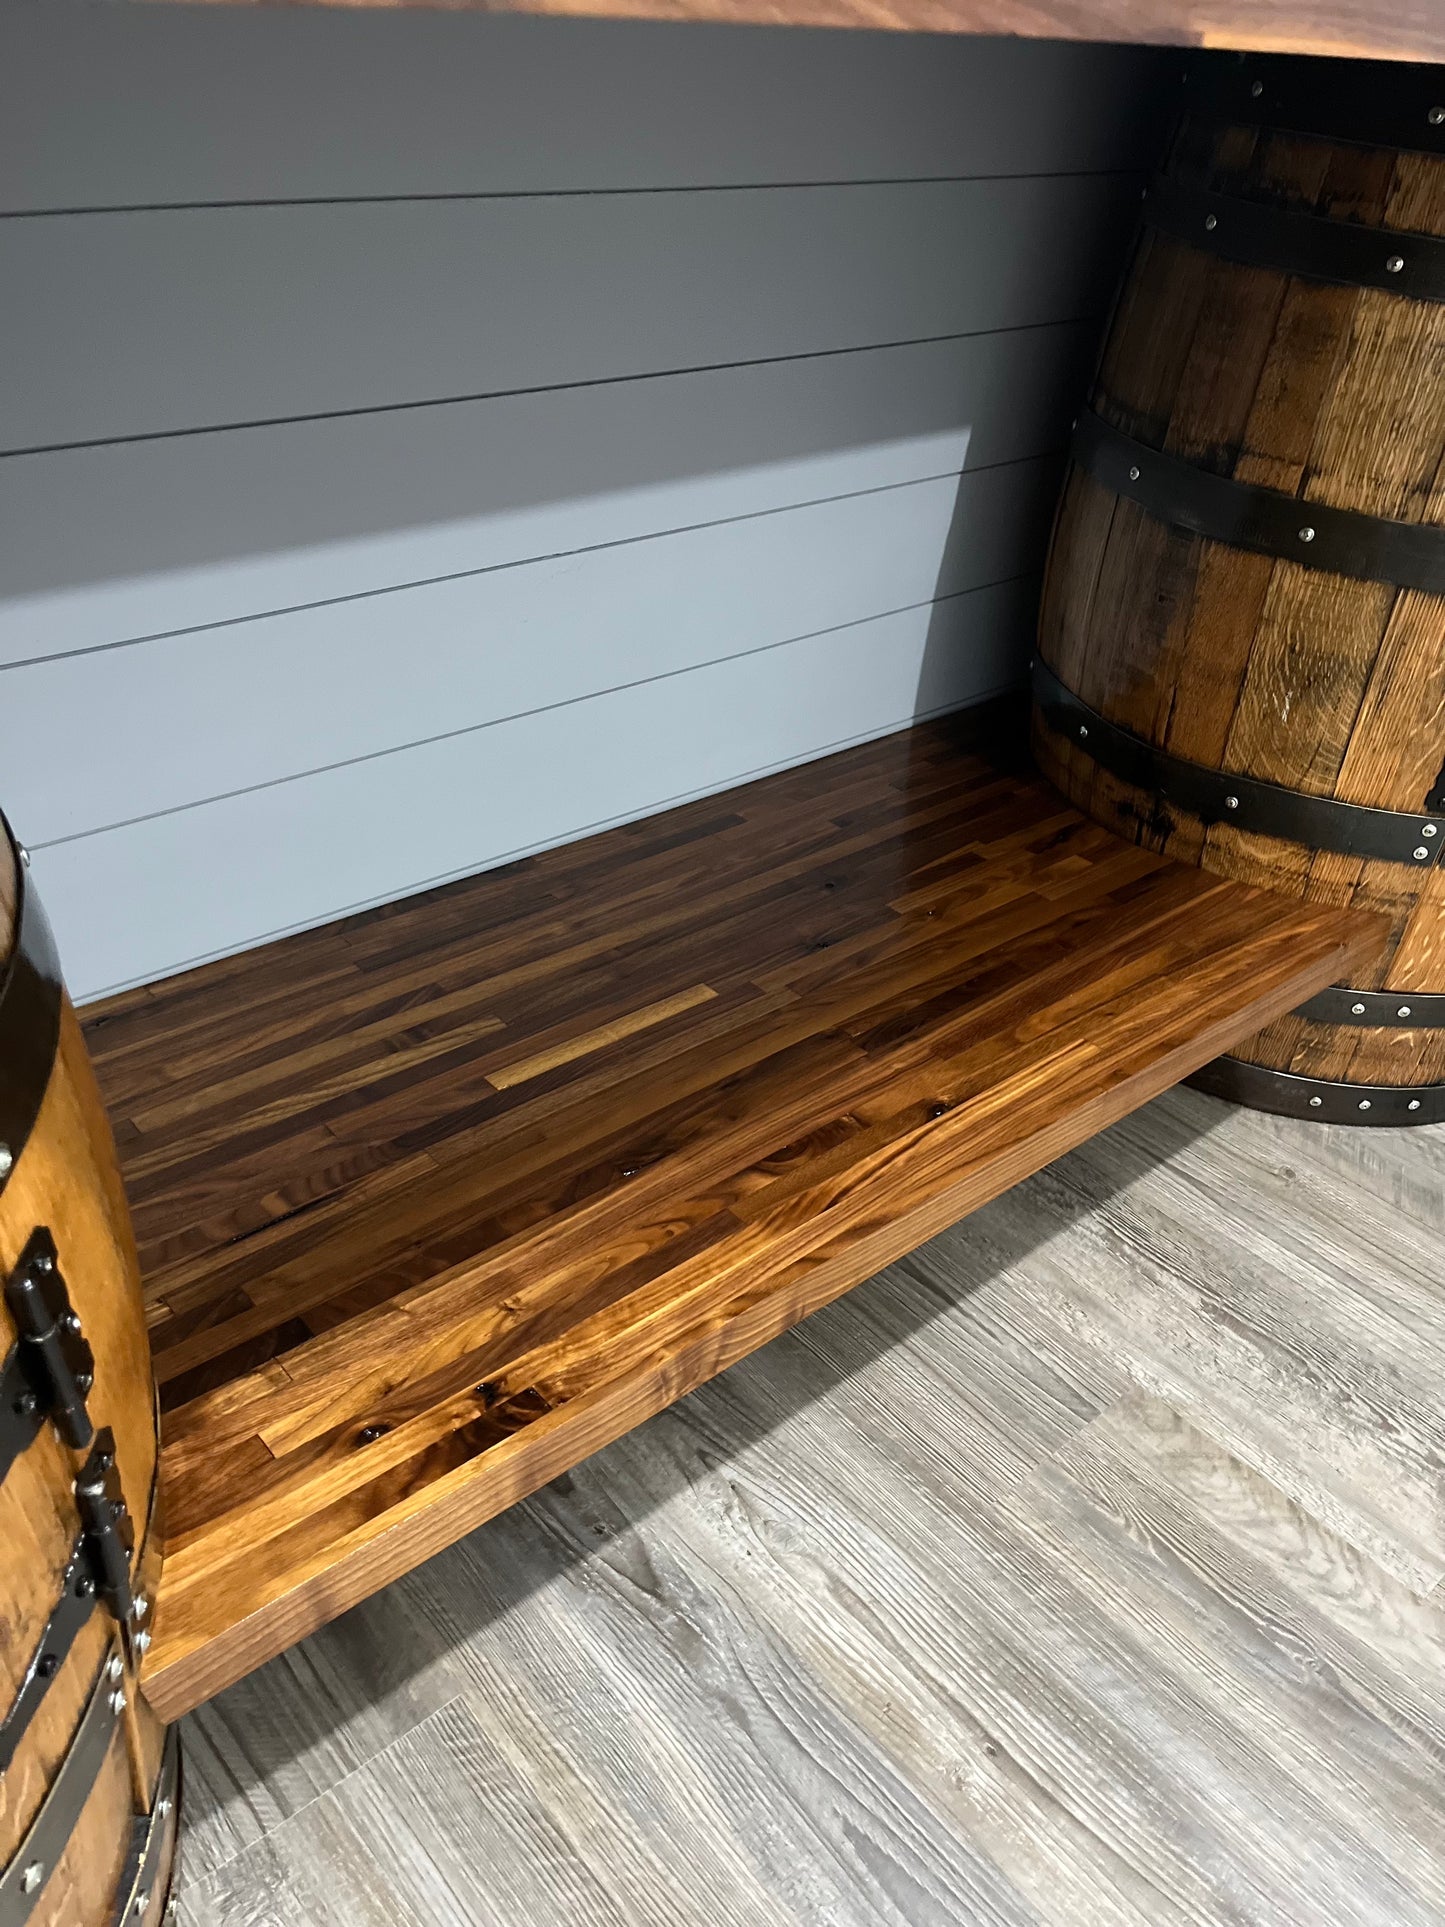 Bourbon Barrel Cabinets with Butcher Block Countertop